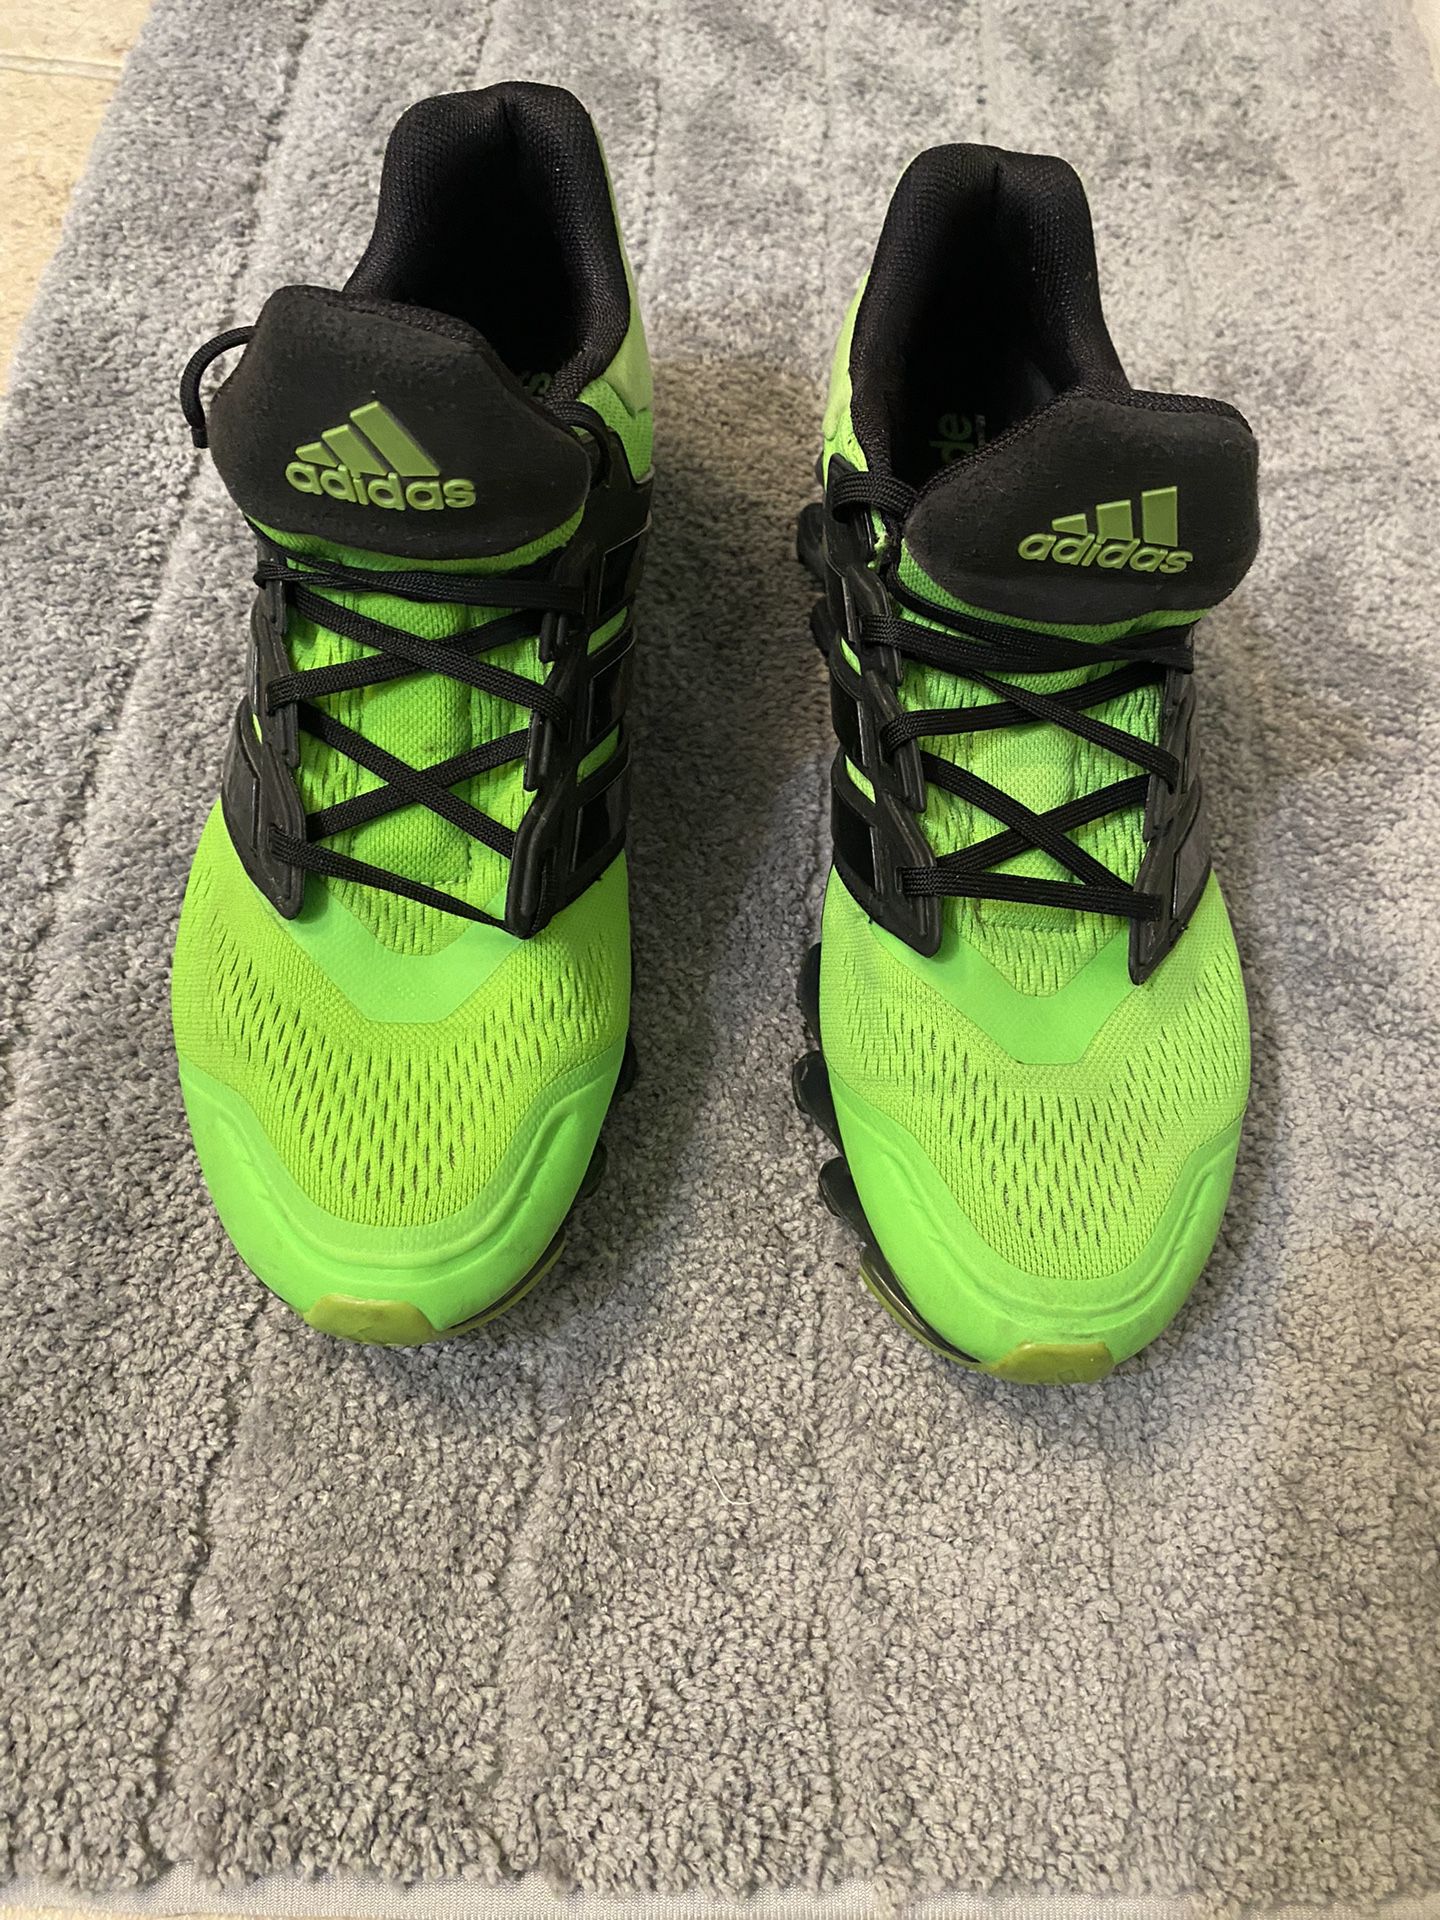 Men’s Adidas Running Shoes 